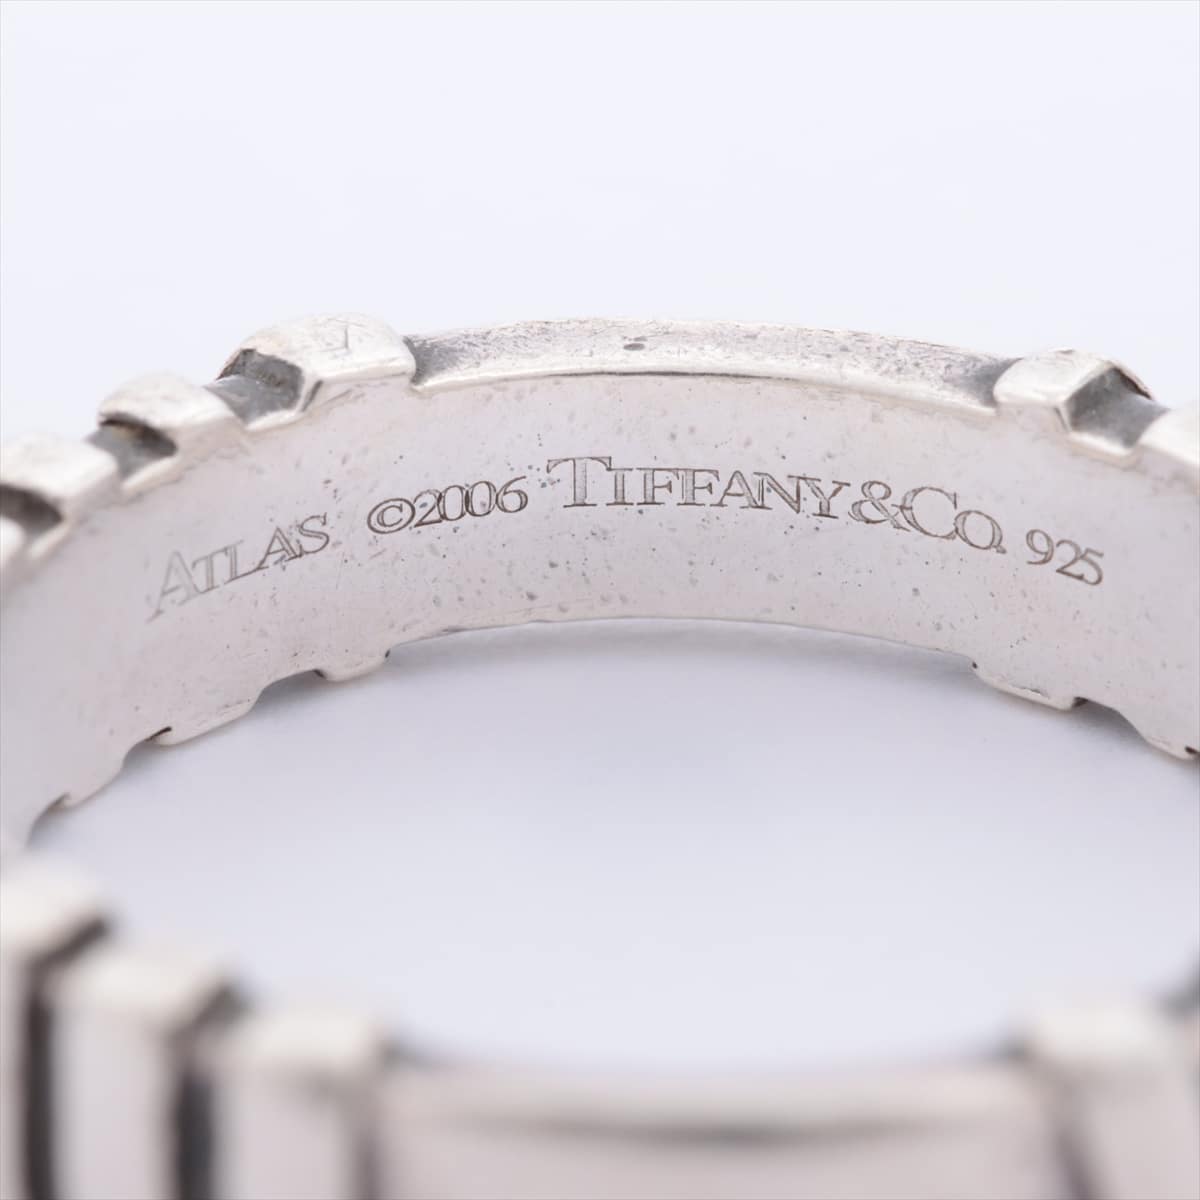 Tiffany Atlas rings 925 4.2g Silver